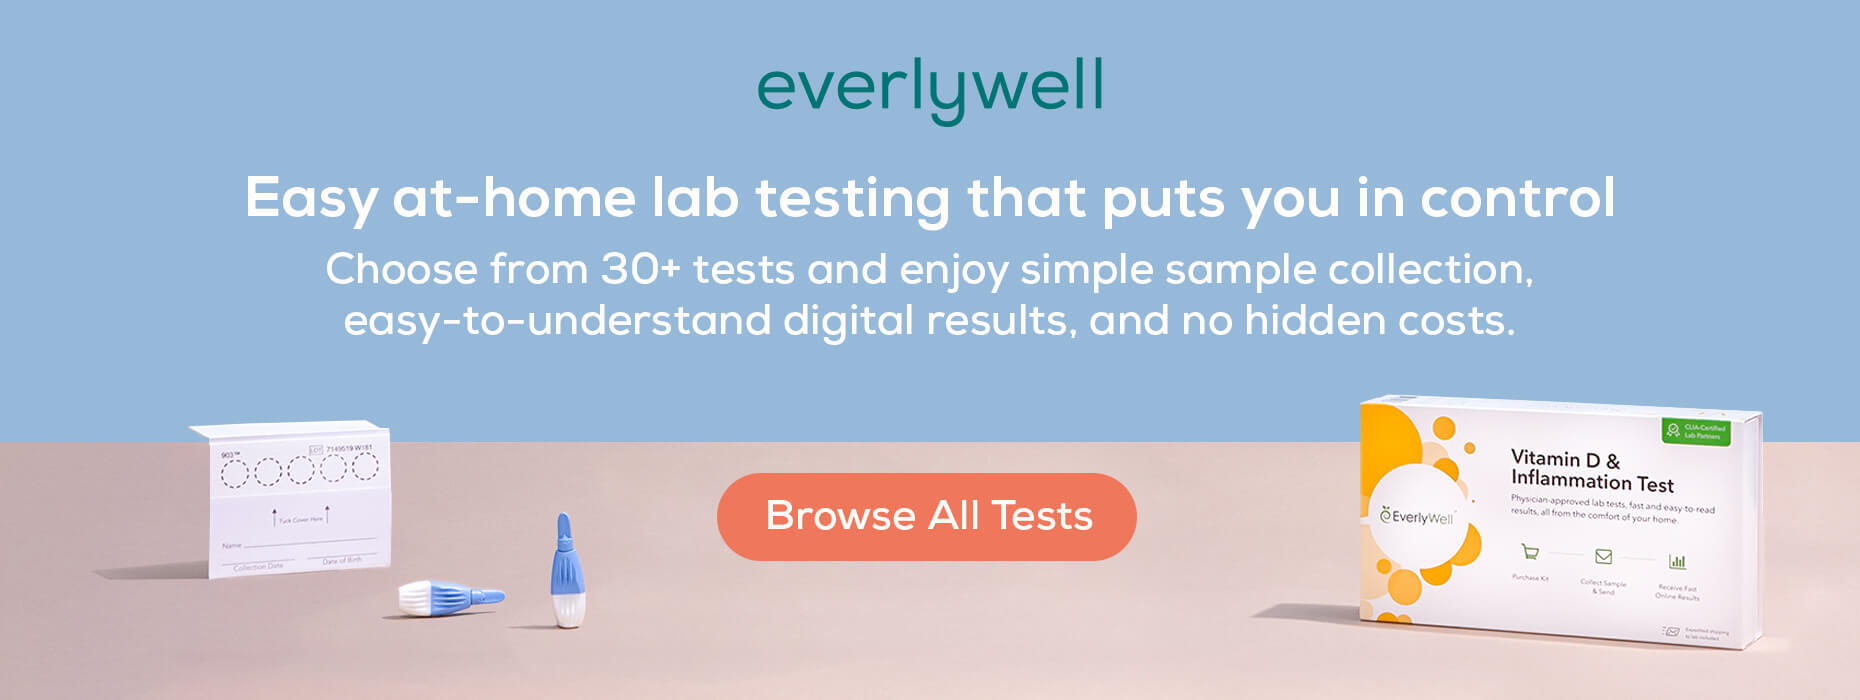 COVID-19 testing: PCR vs. rapid antigen tests - Blog | Everlywell ...